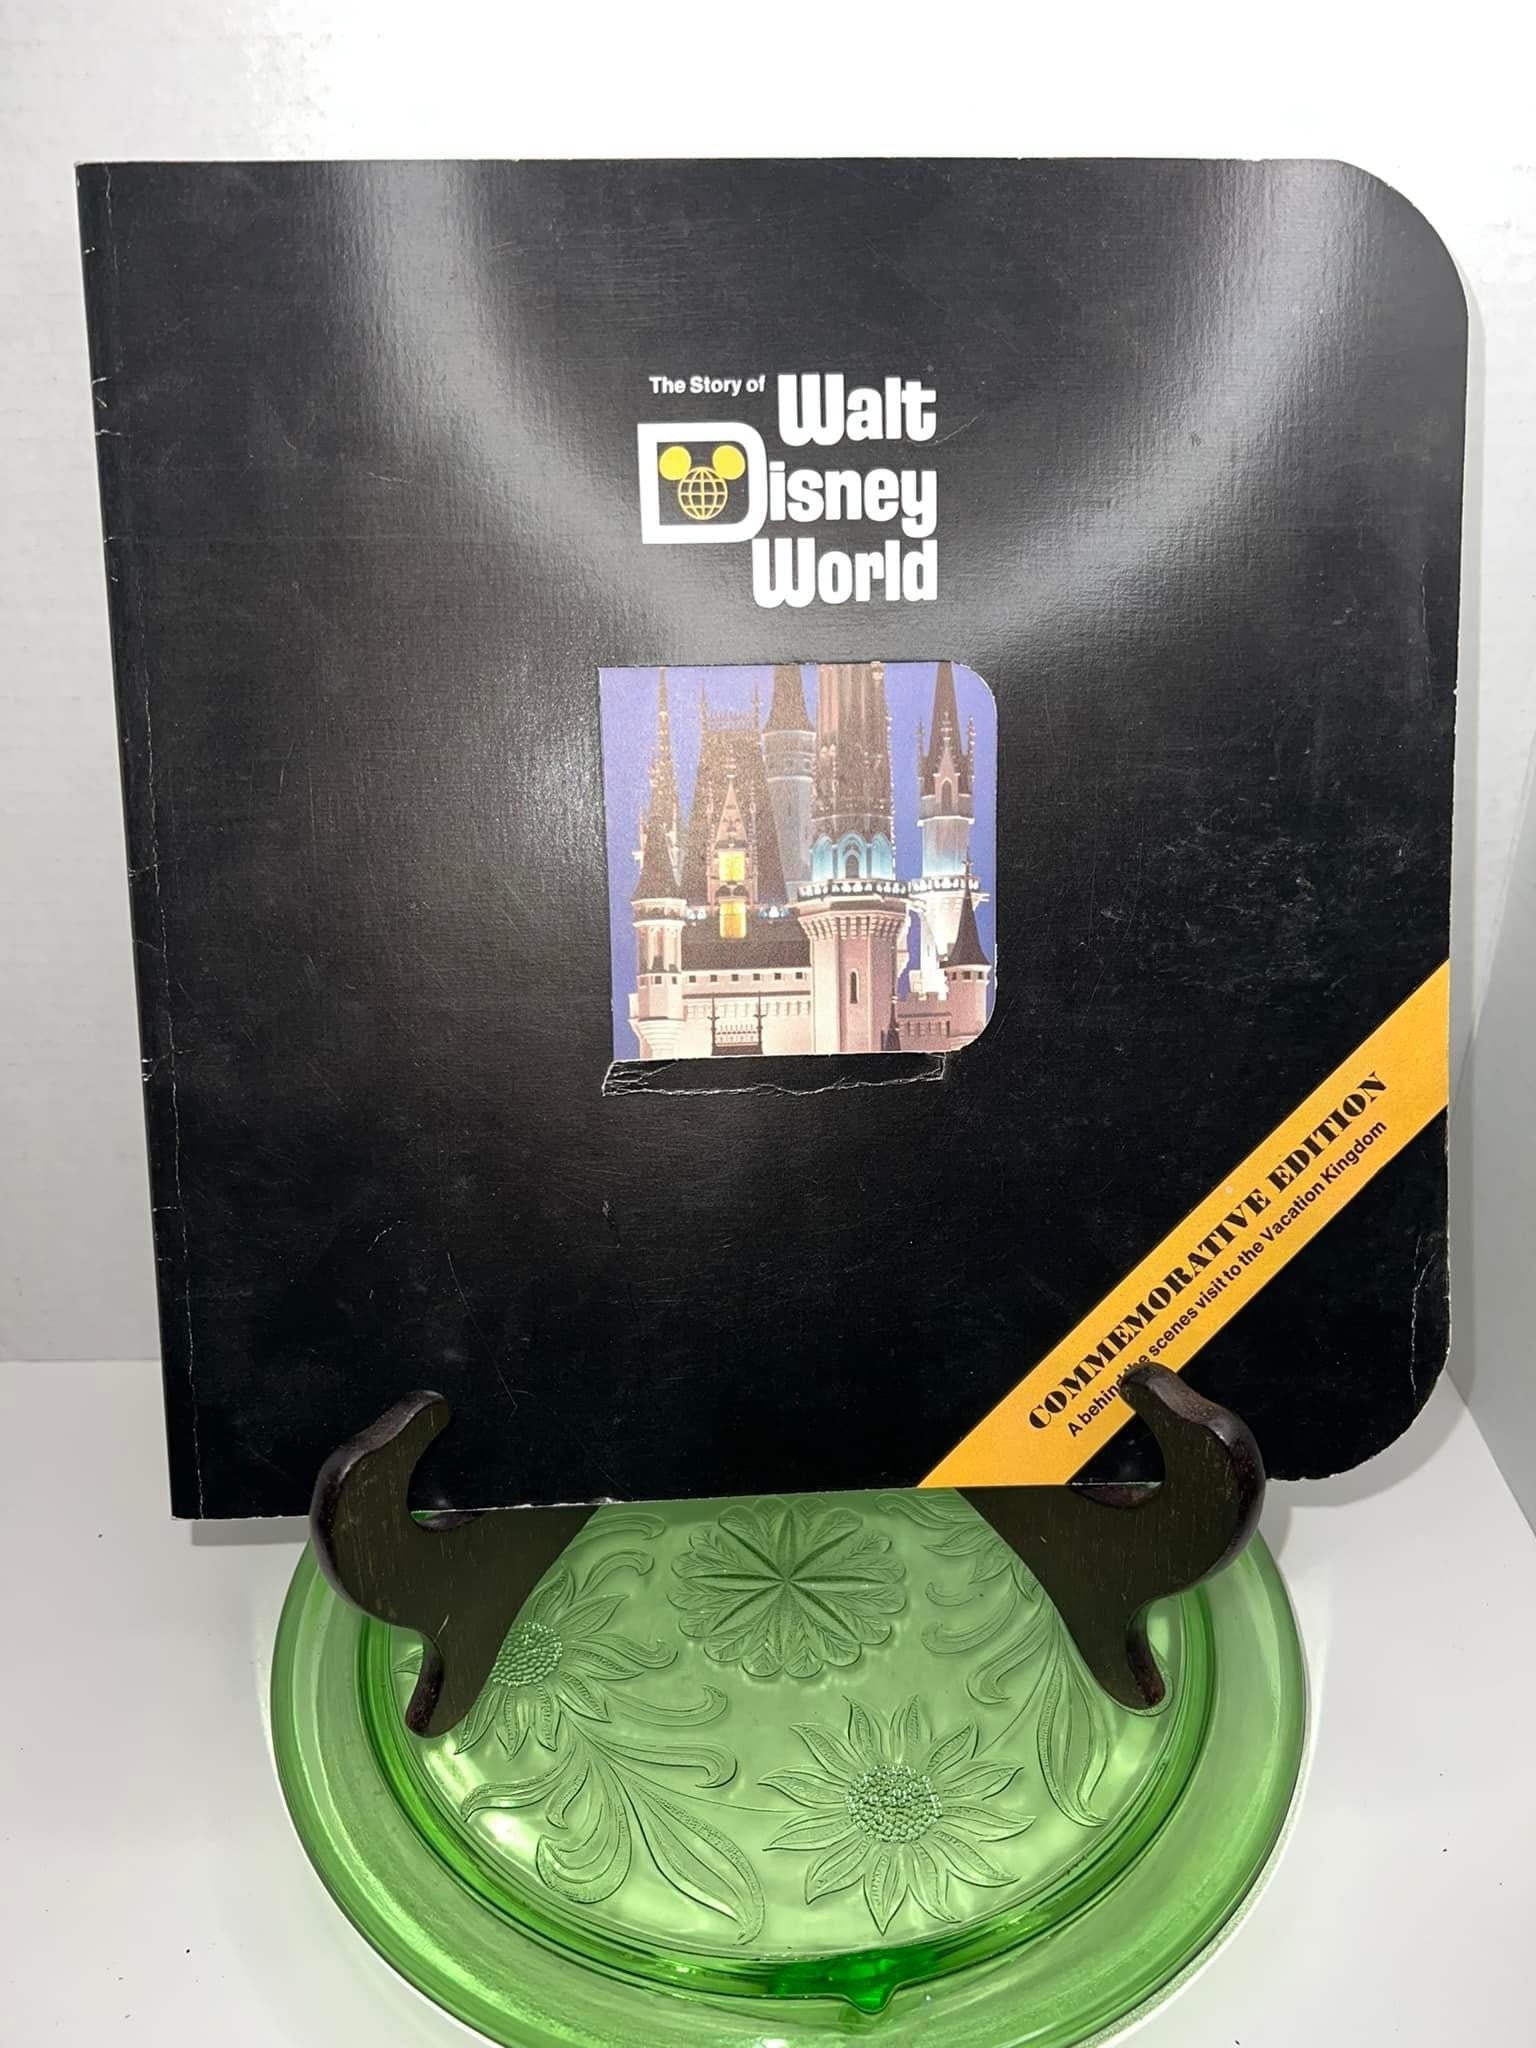 Vintage The story of Walt Disney 1971 commemorative edition